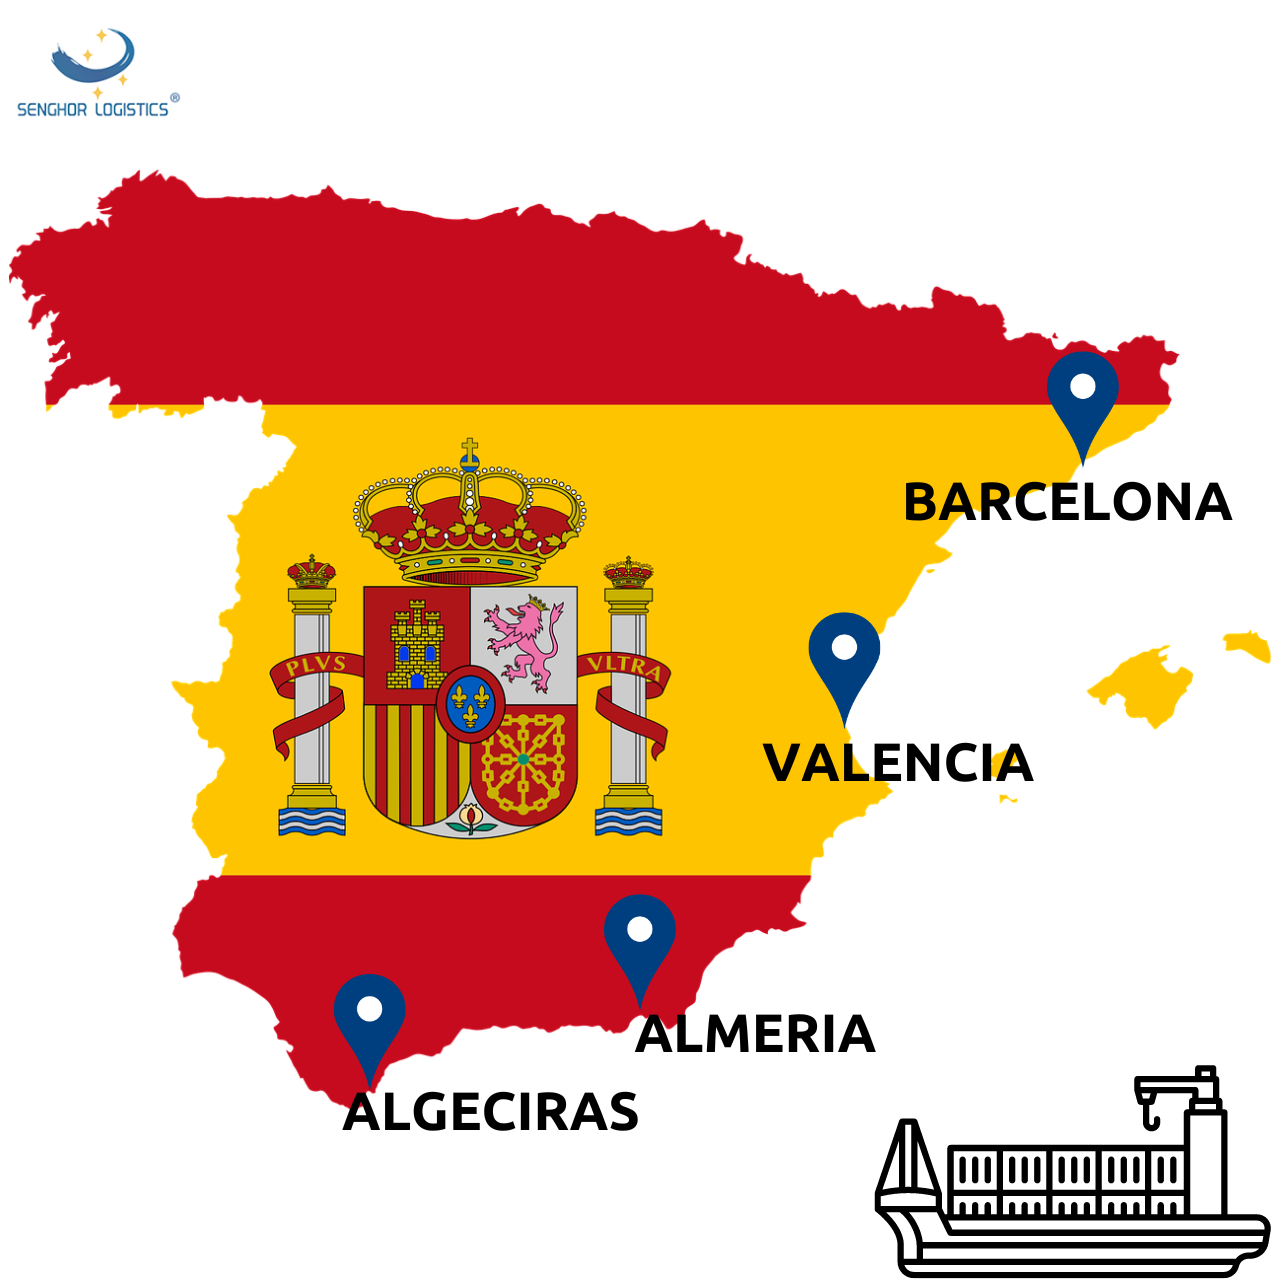 transport logistic senghor din China în Spania